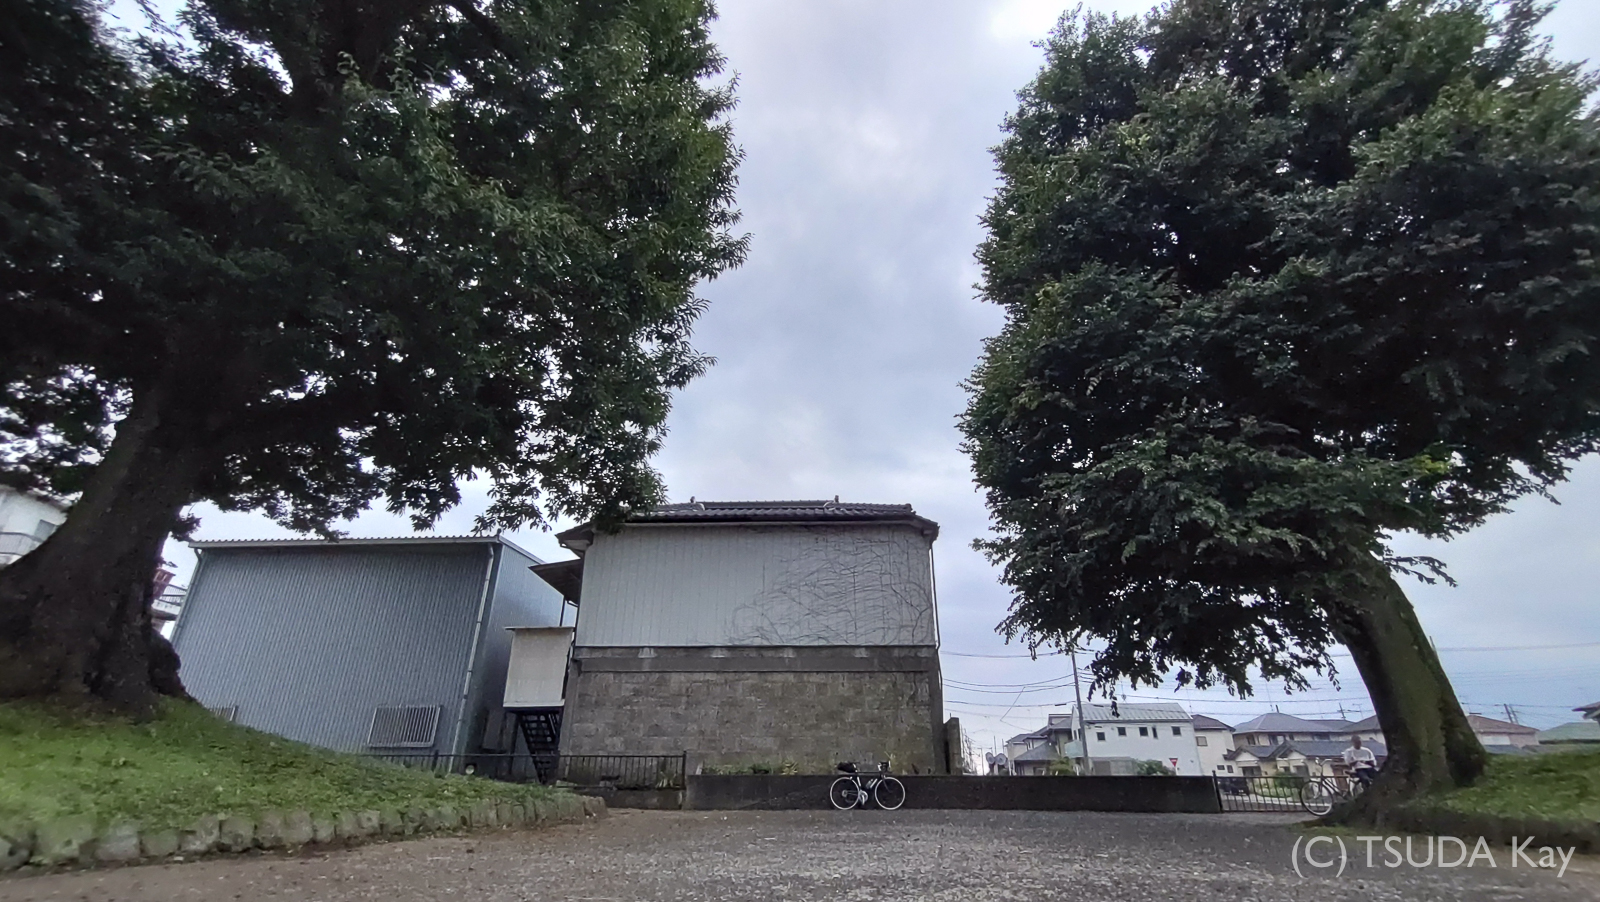 I cycled old nikko road 32